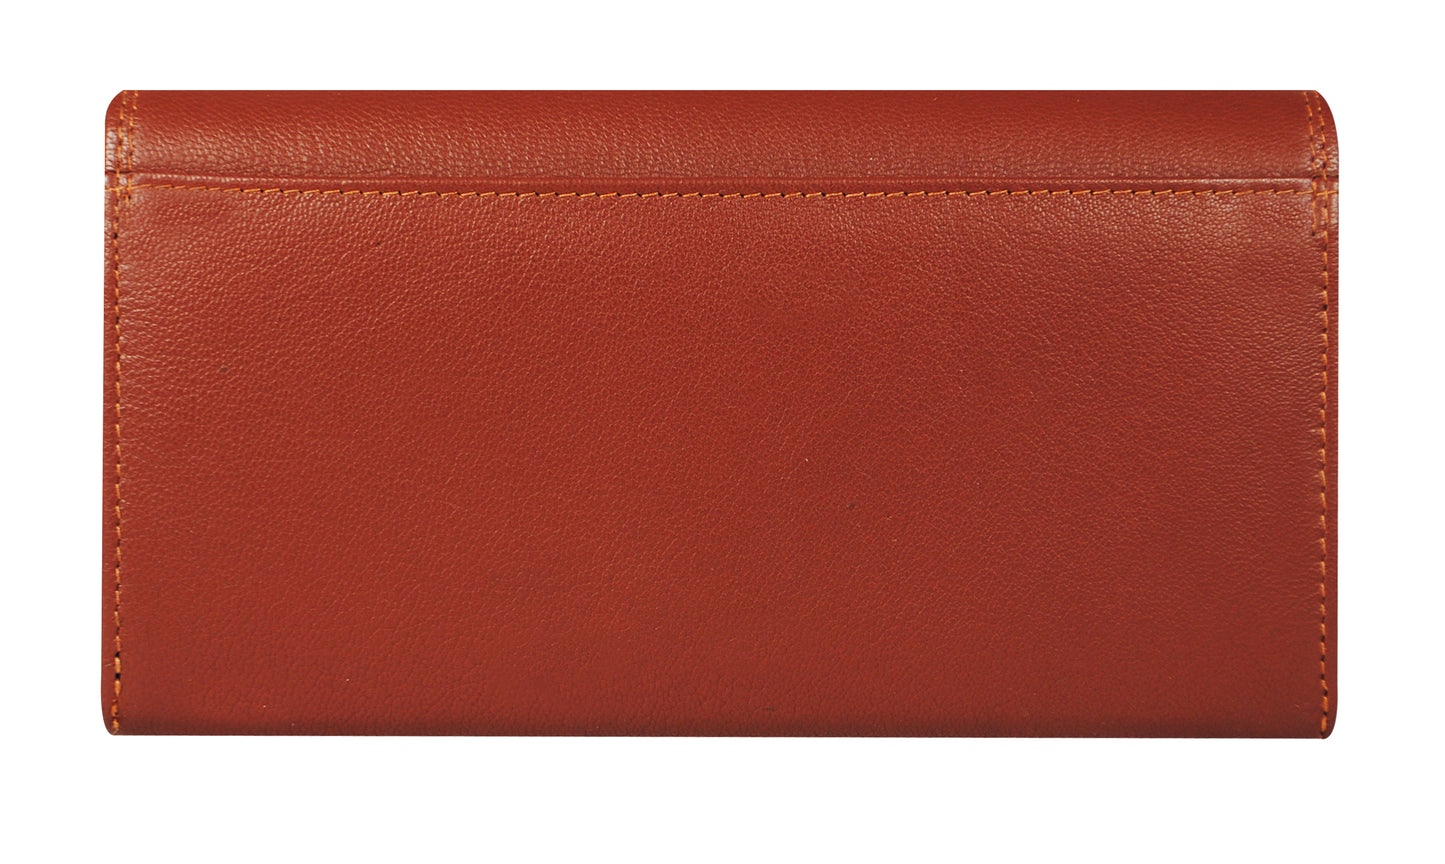 Calfnero Genuine Leather Women's wallet (1883-Cognac)